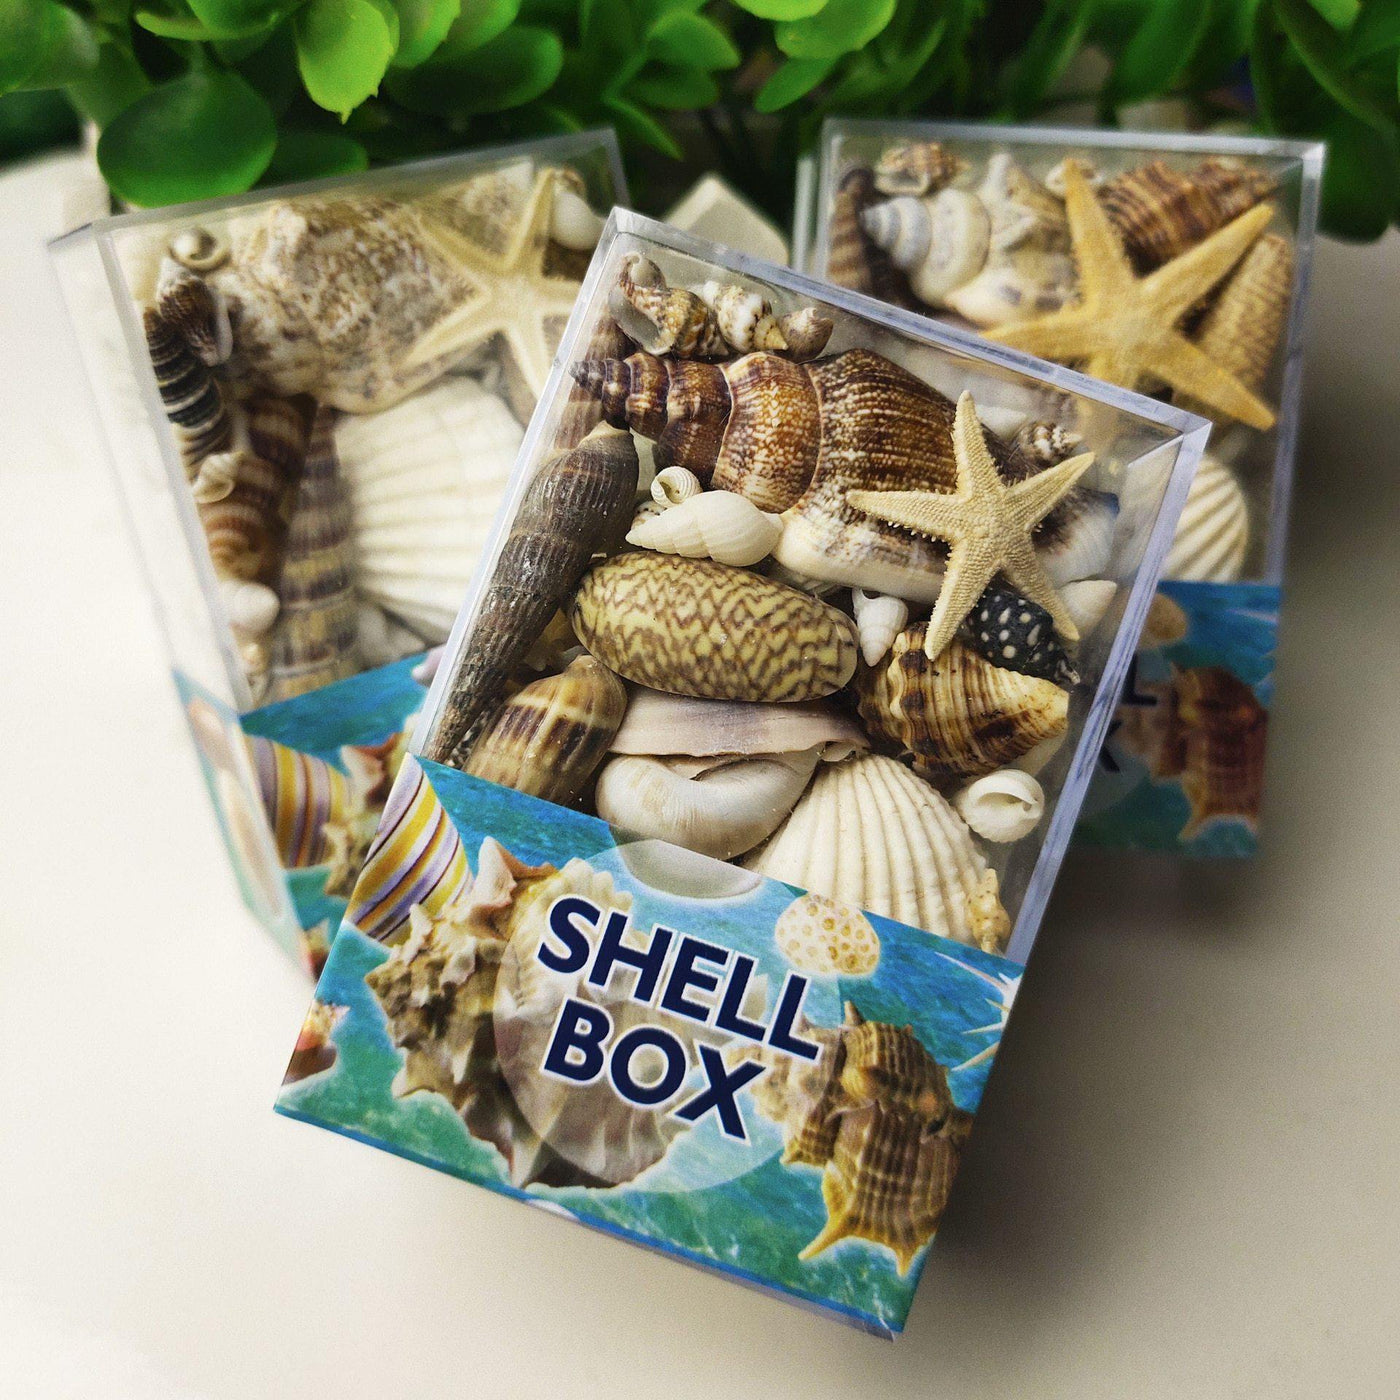 Shell Box (50g) - 